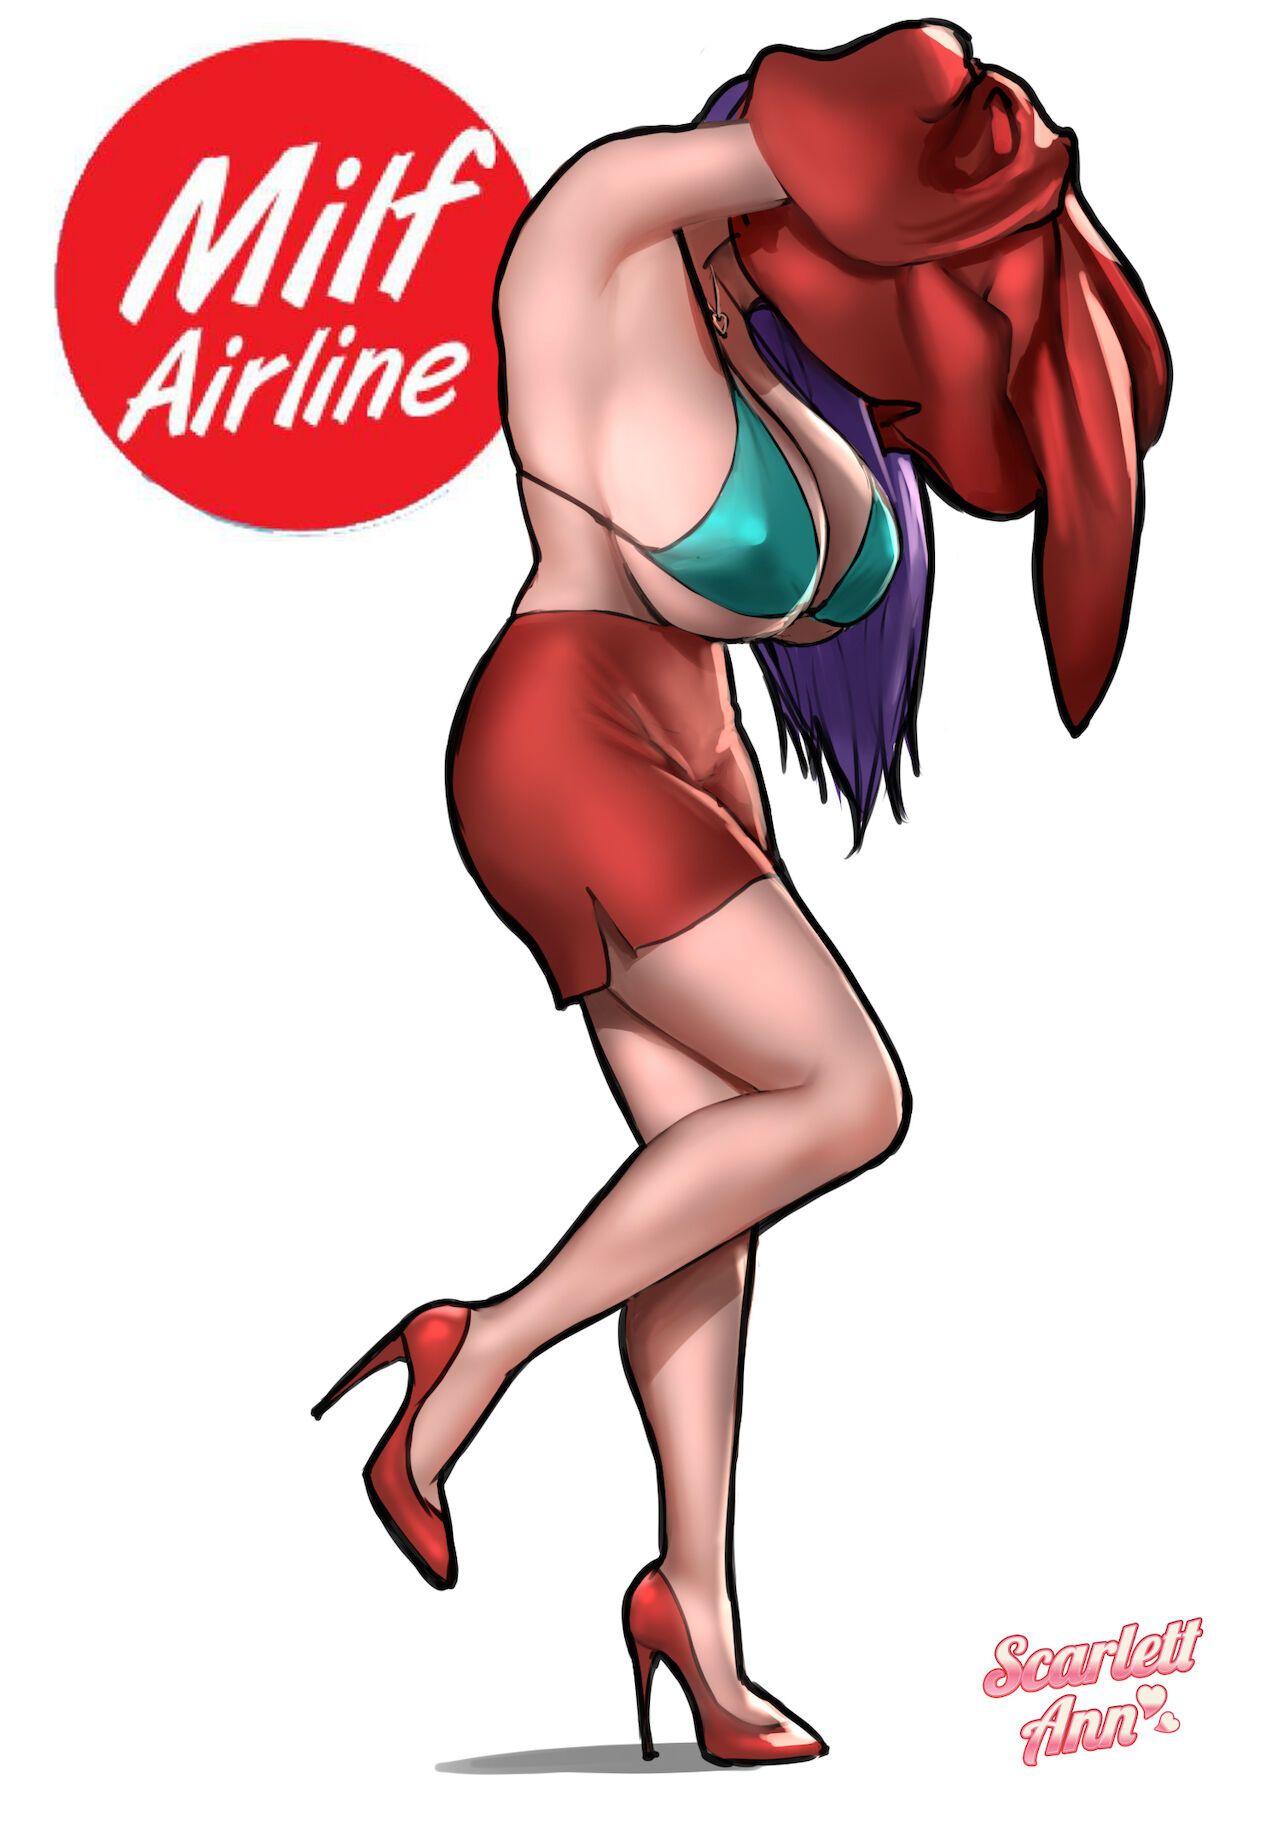 Milf Airline Porn Comic english 53